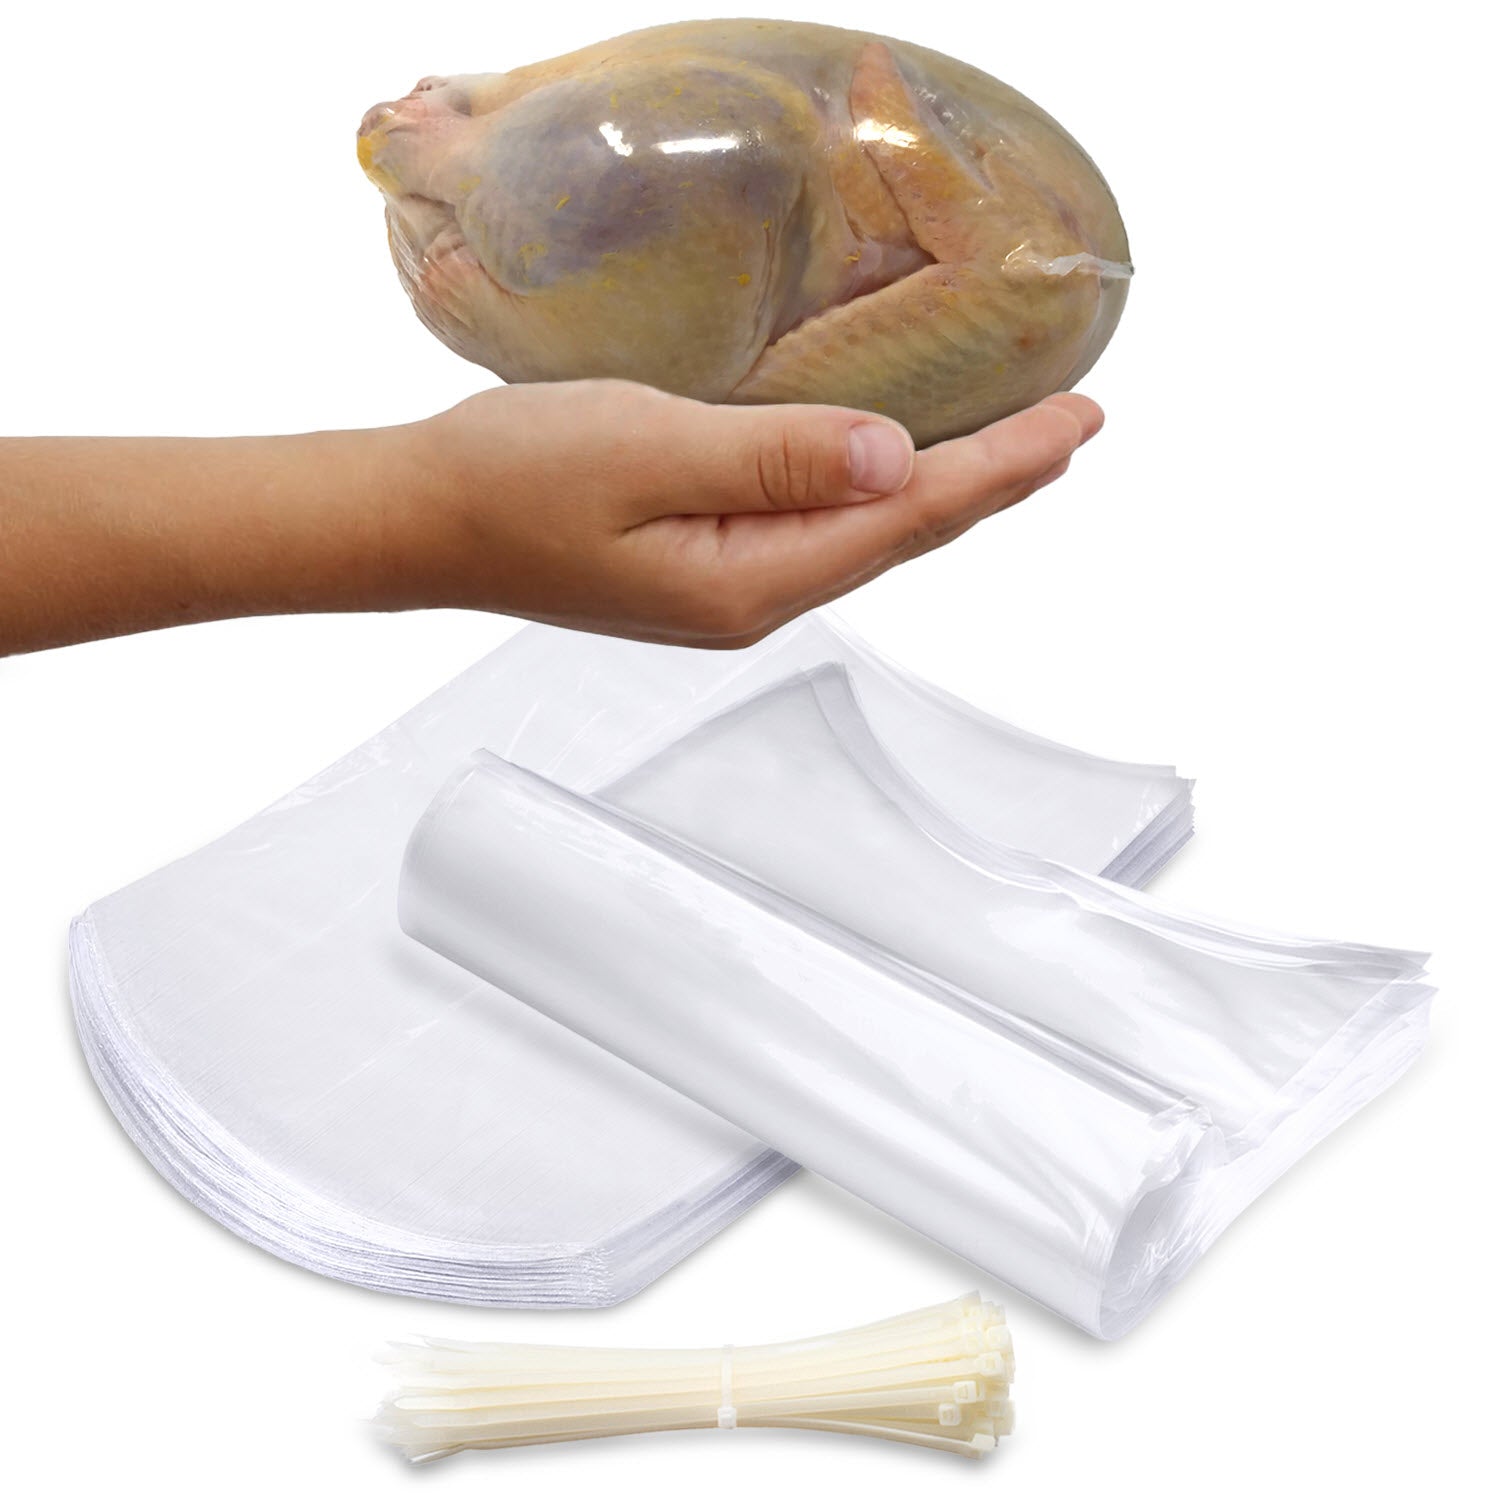 Turkey Shrink Bags - Featherman Equipment - Heat Shrink Bags